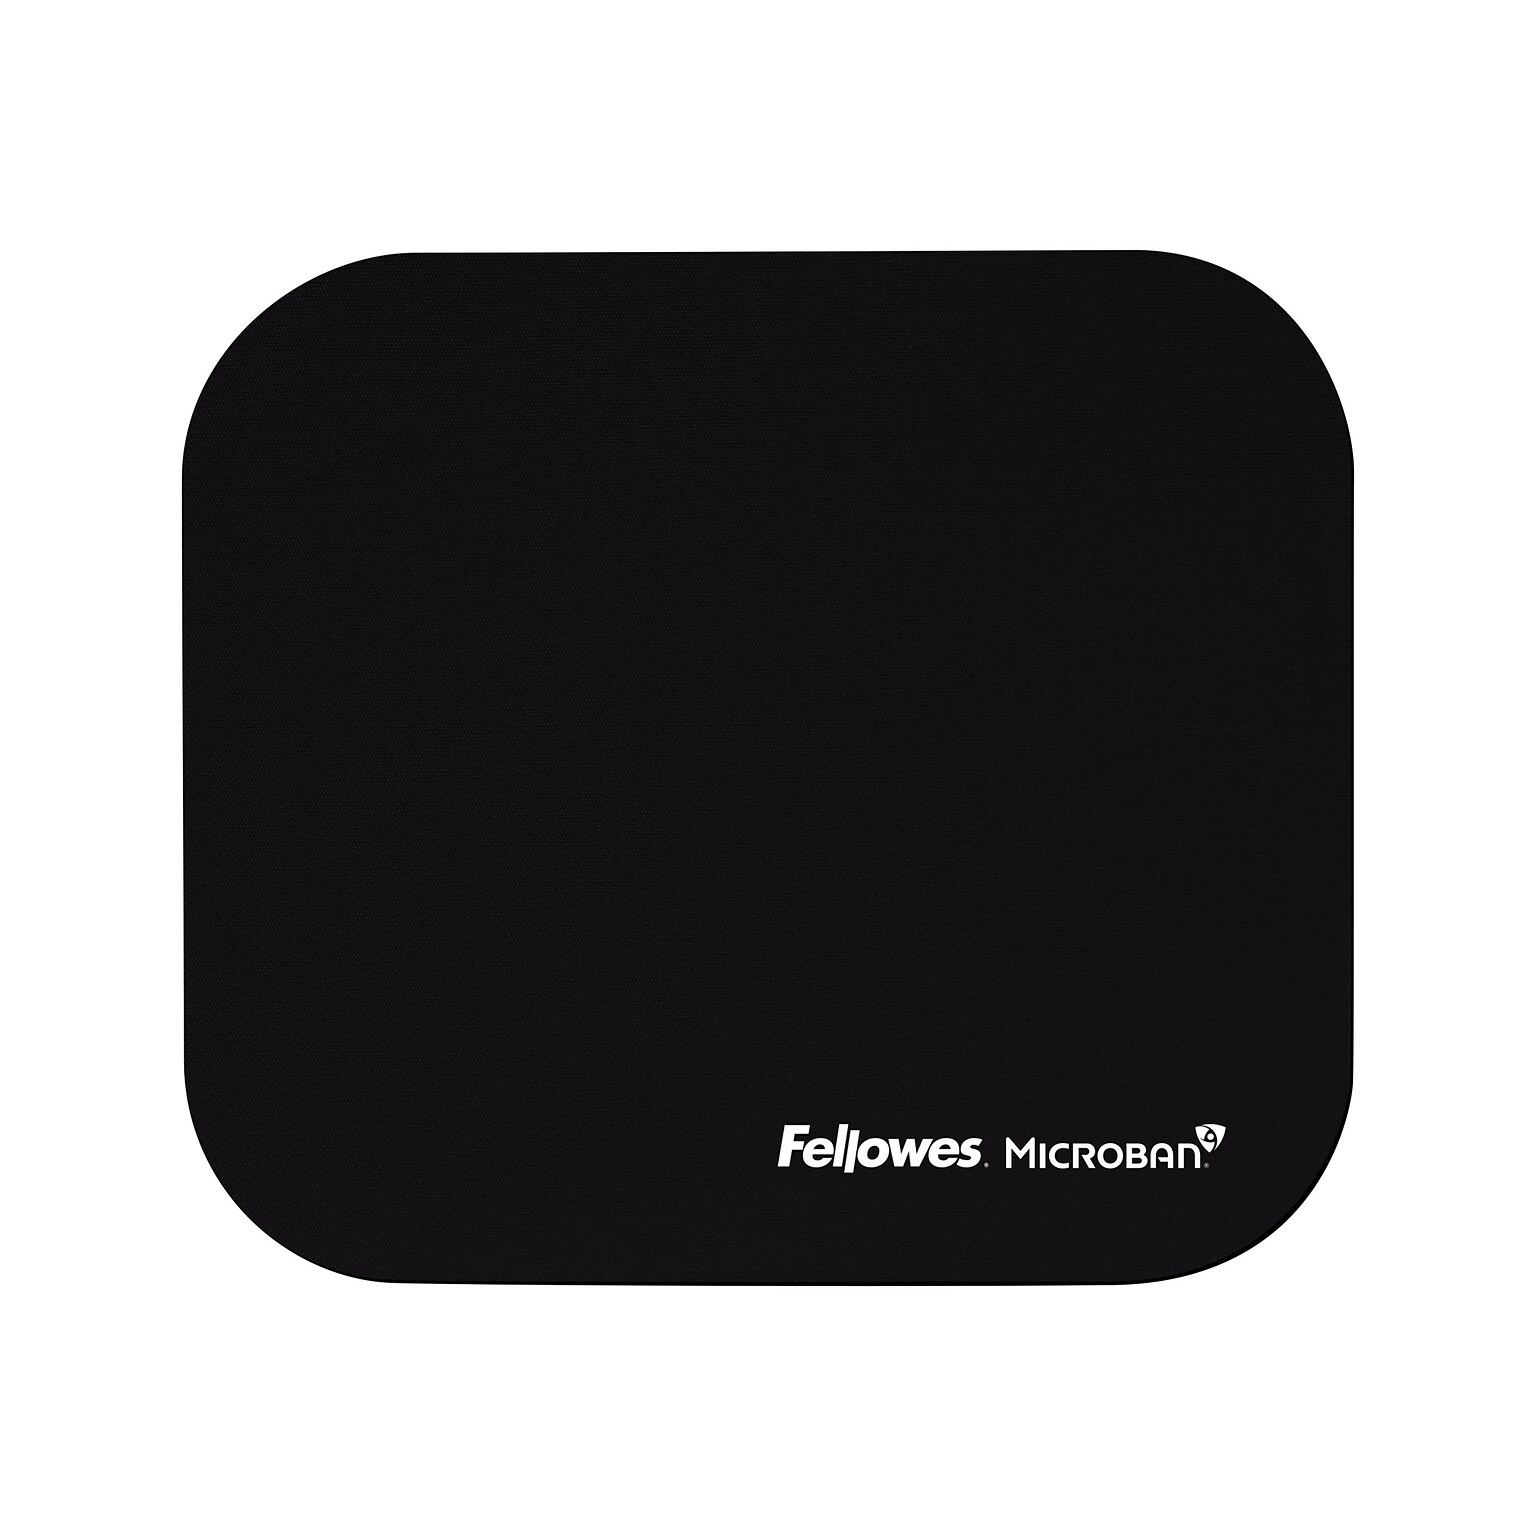 Fellowes Microban Non-Skid Mouse Pad, Black (5933901)